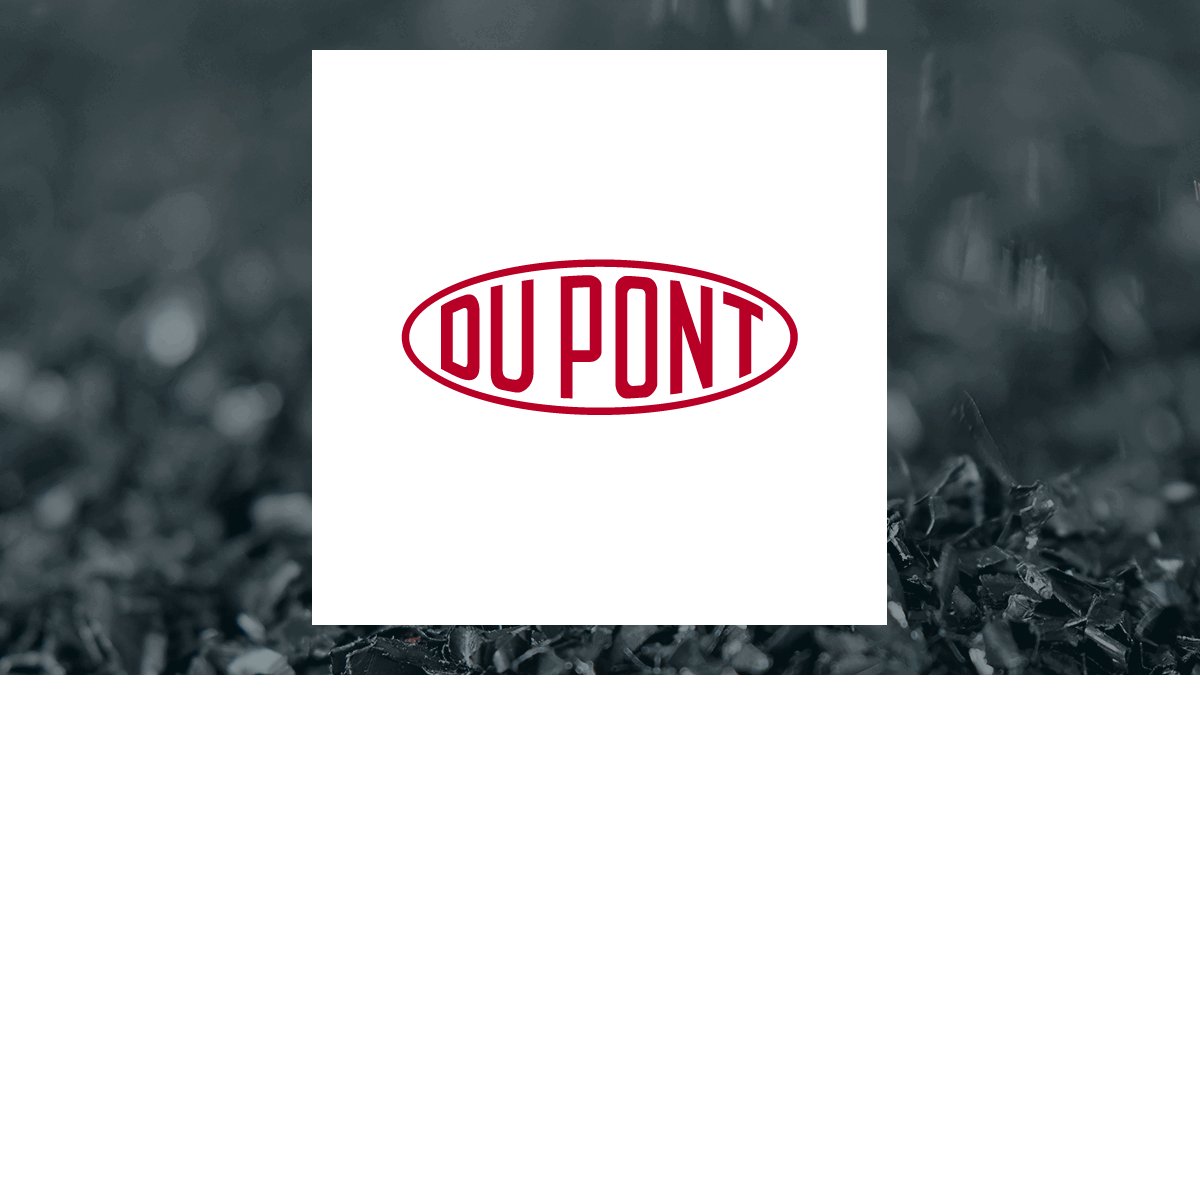 DuPont de Nemours logo with Basic Materials background